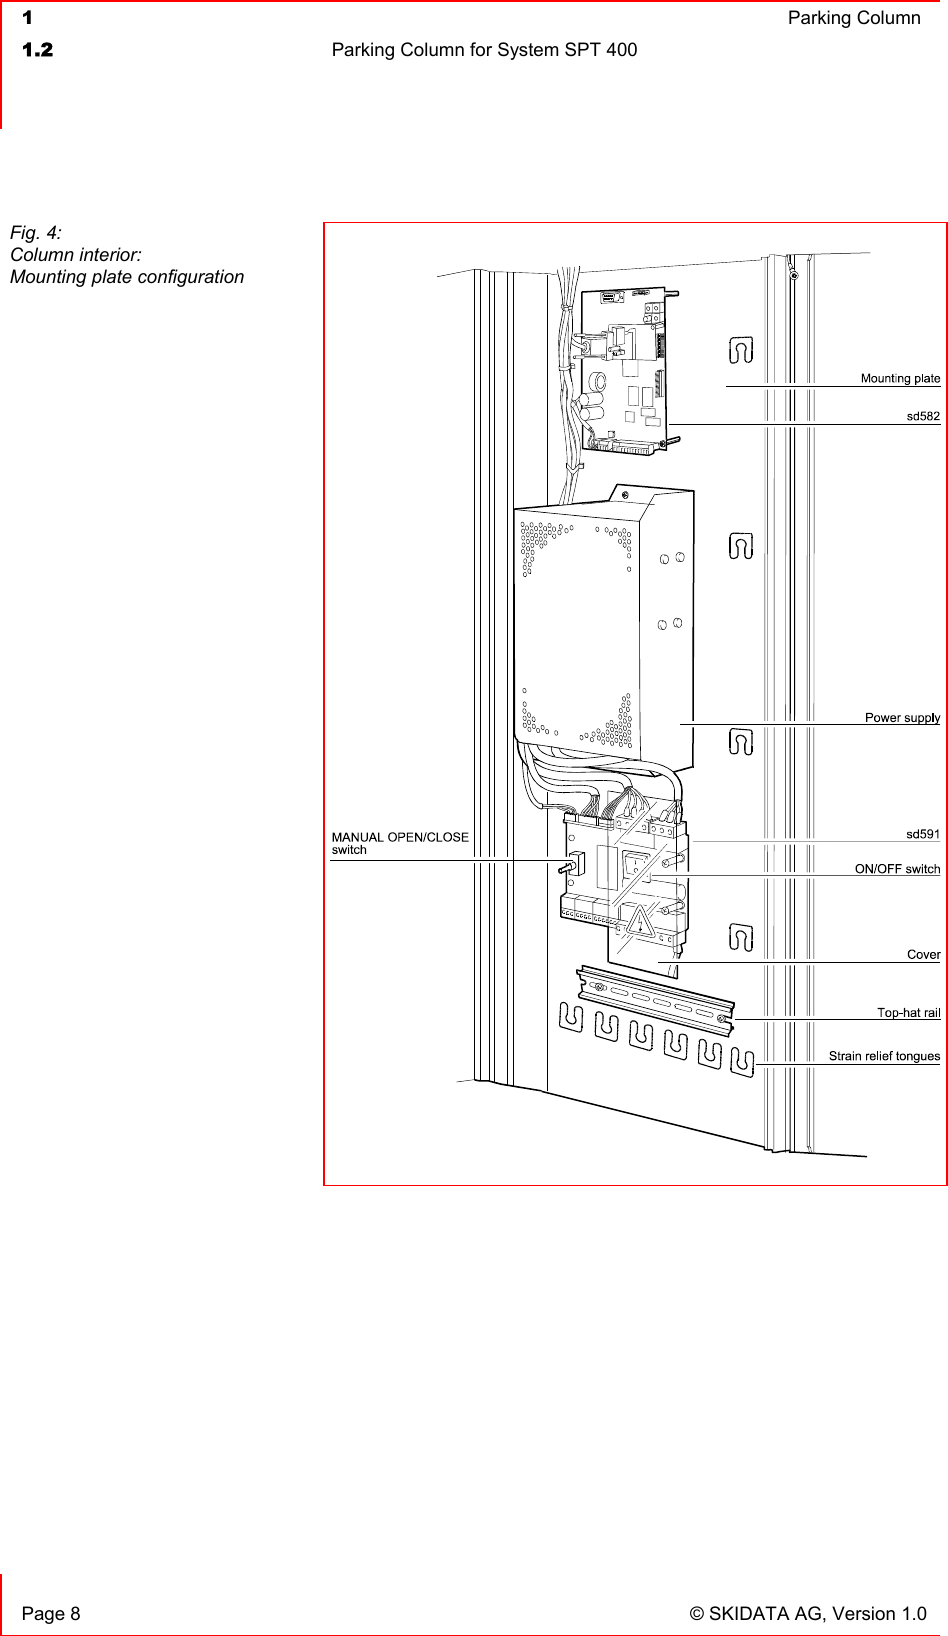  1  Parking Column1.2  Parking Column for System SPT 400  Page 8  © SKIDATA AG, Version 1.0 Fig. 4: Column interior:Mounting plate configuration